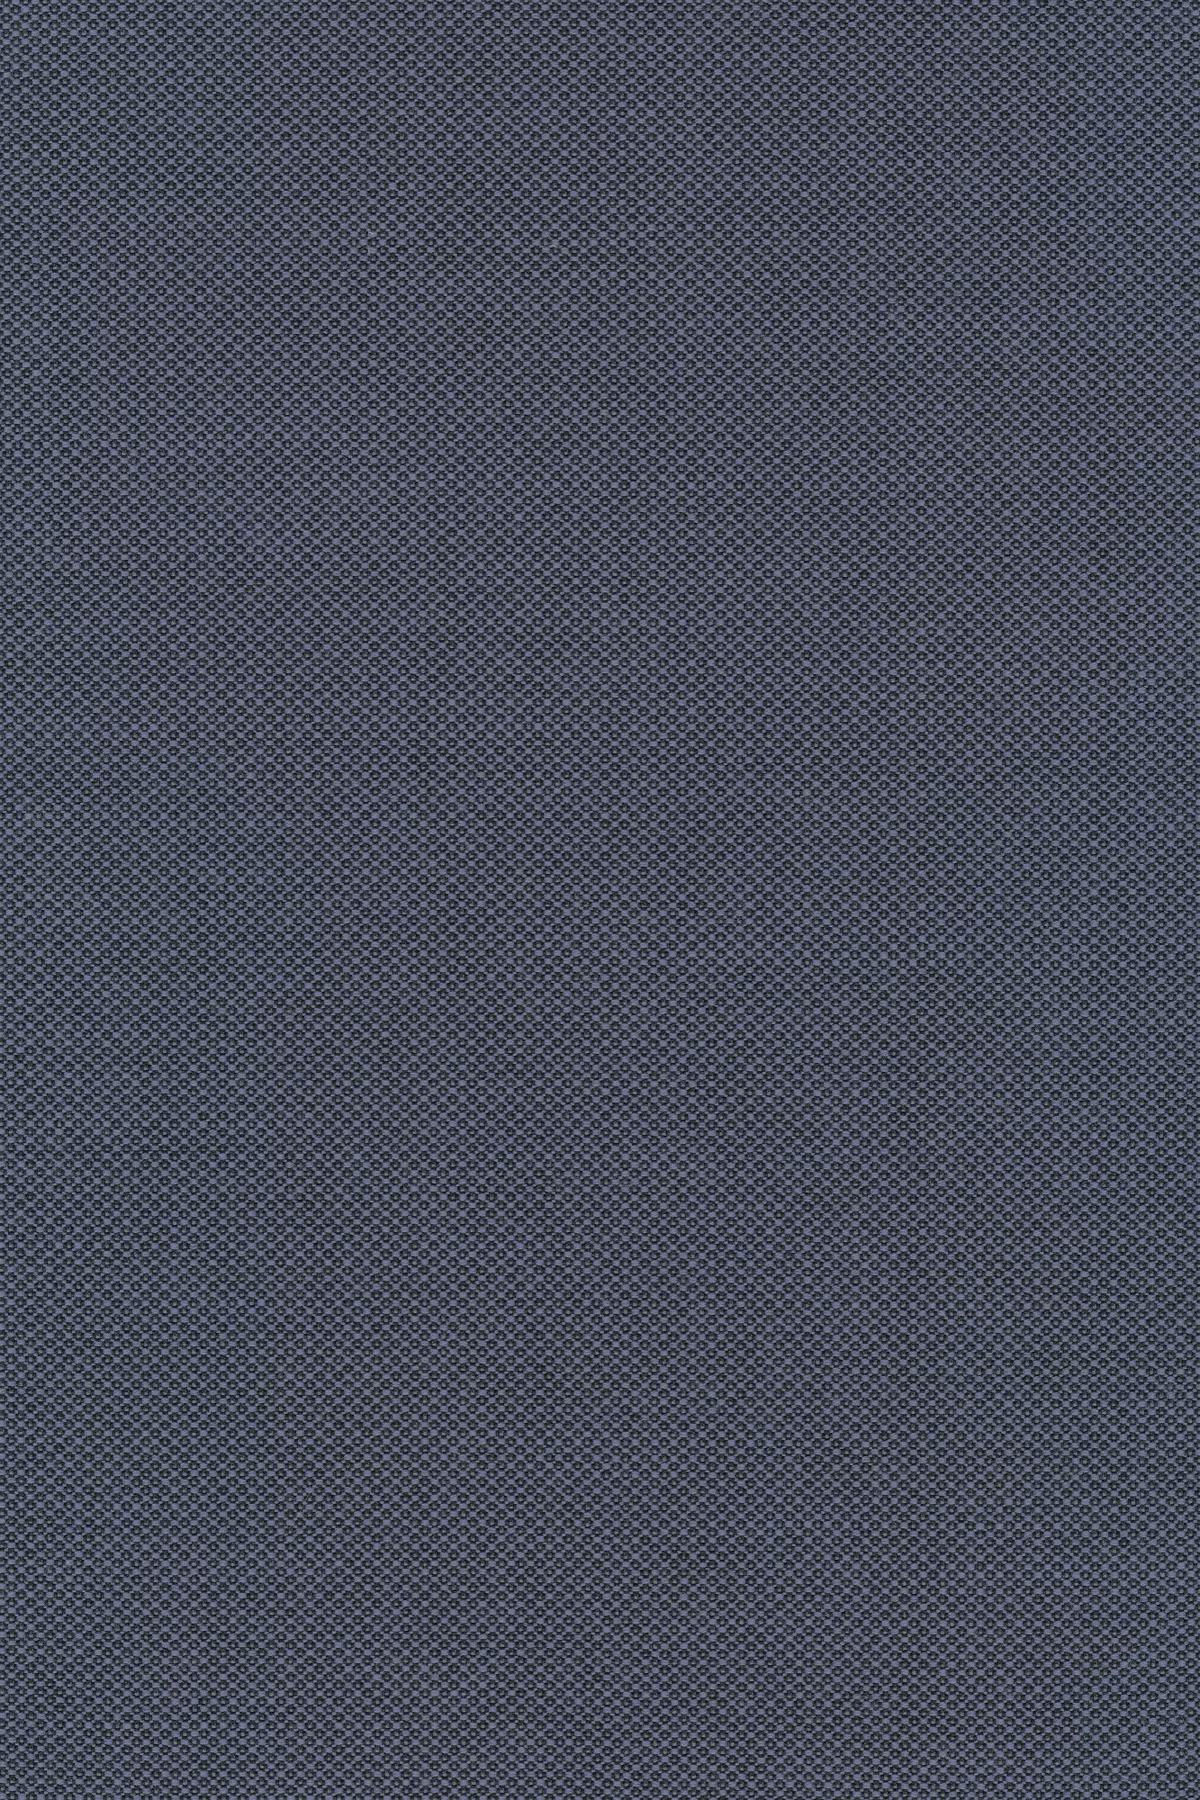 Fabric sample Fiord blue